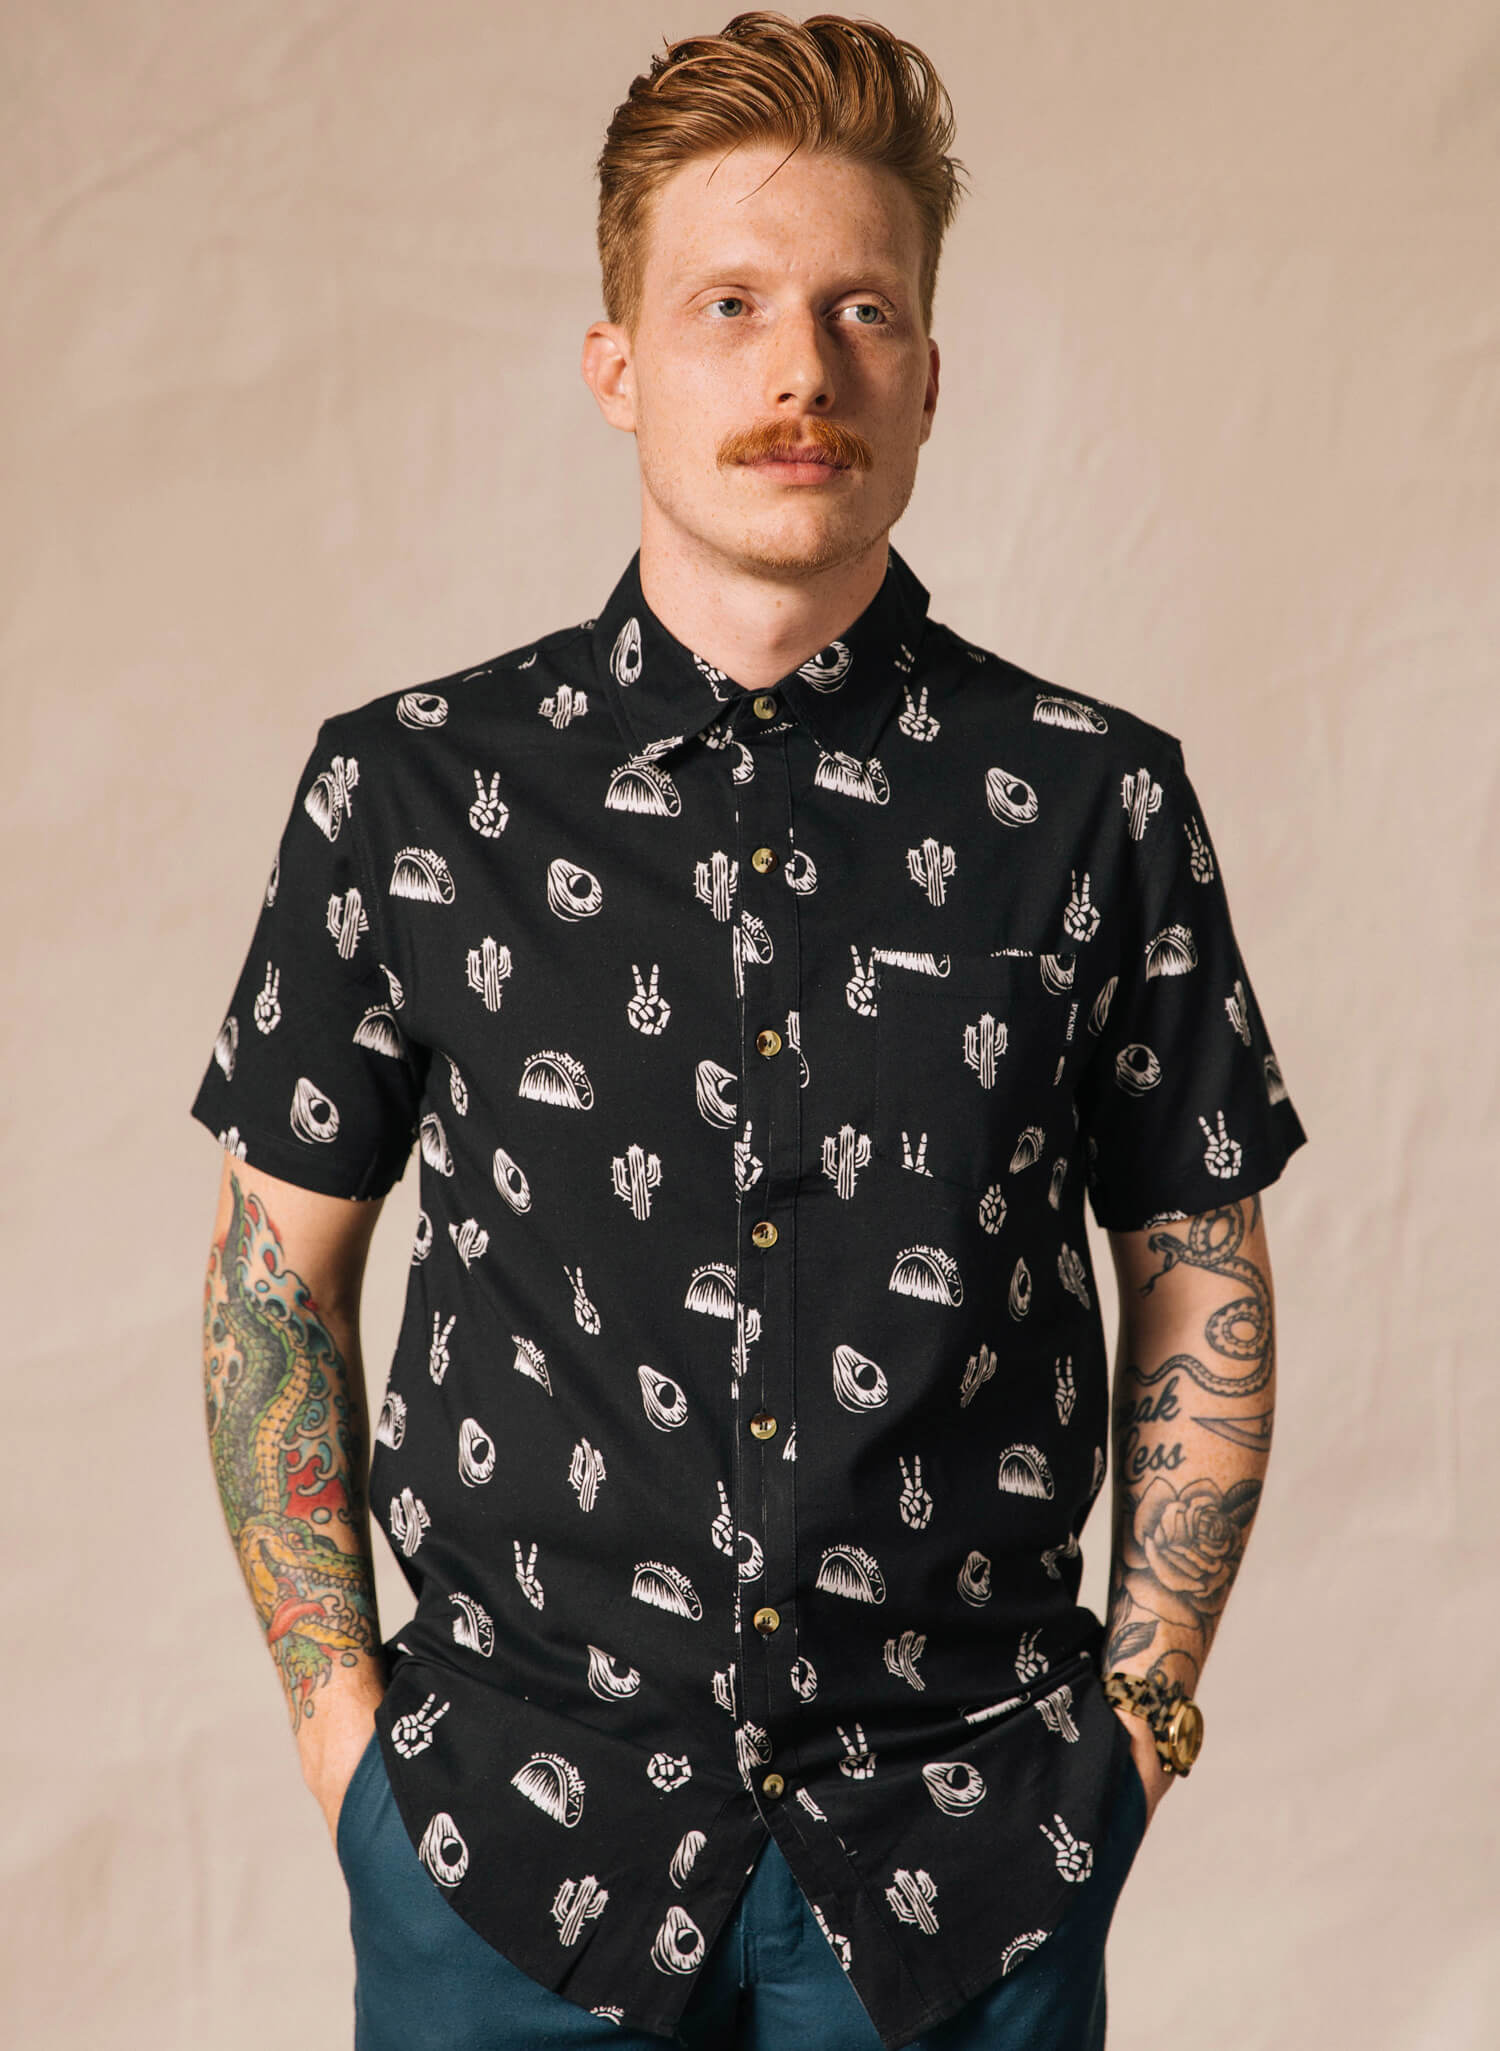 Men's Funky Shirts, Patterned Shirts for Men